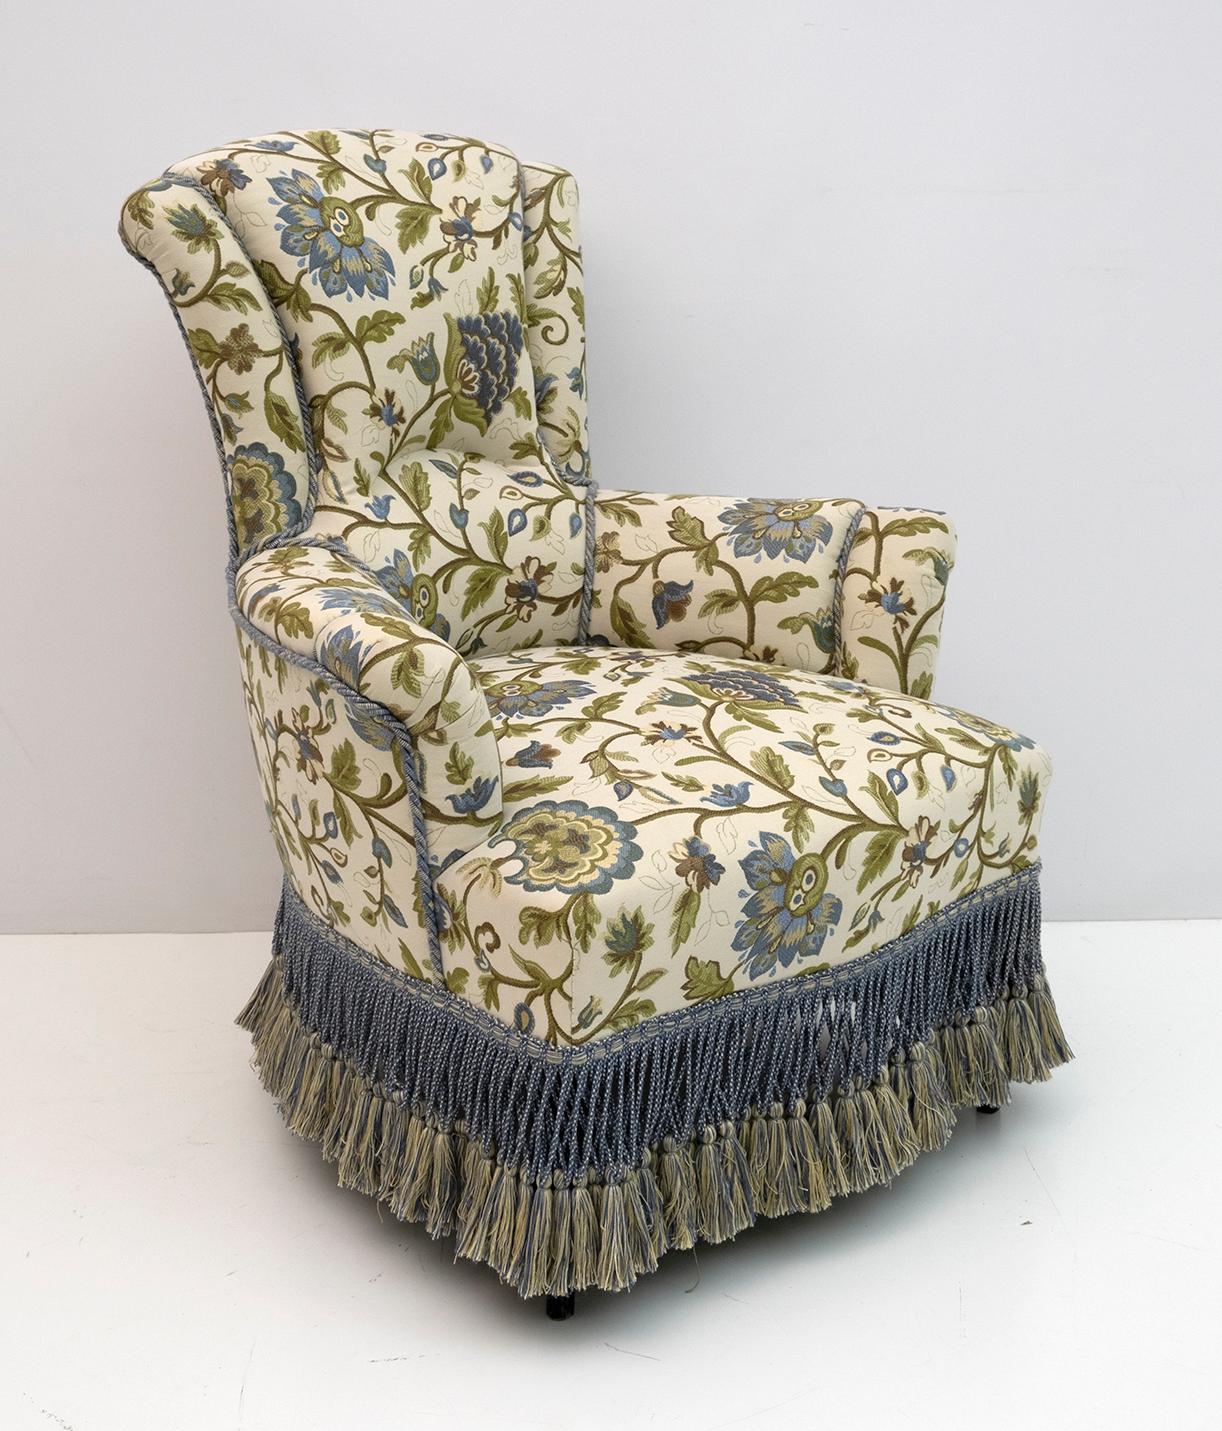 Brocart Paire de rares fauteuils Napoléon III en brocart du 19ème siècle en vente